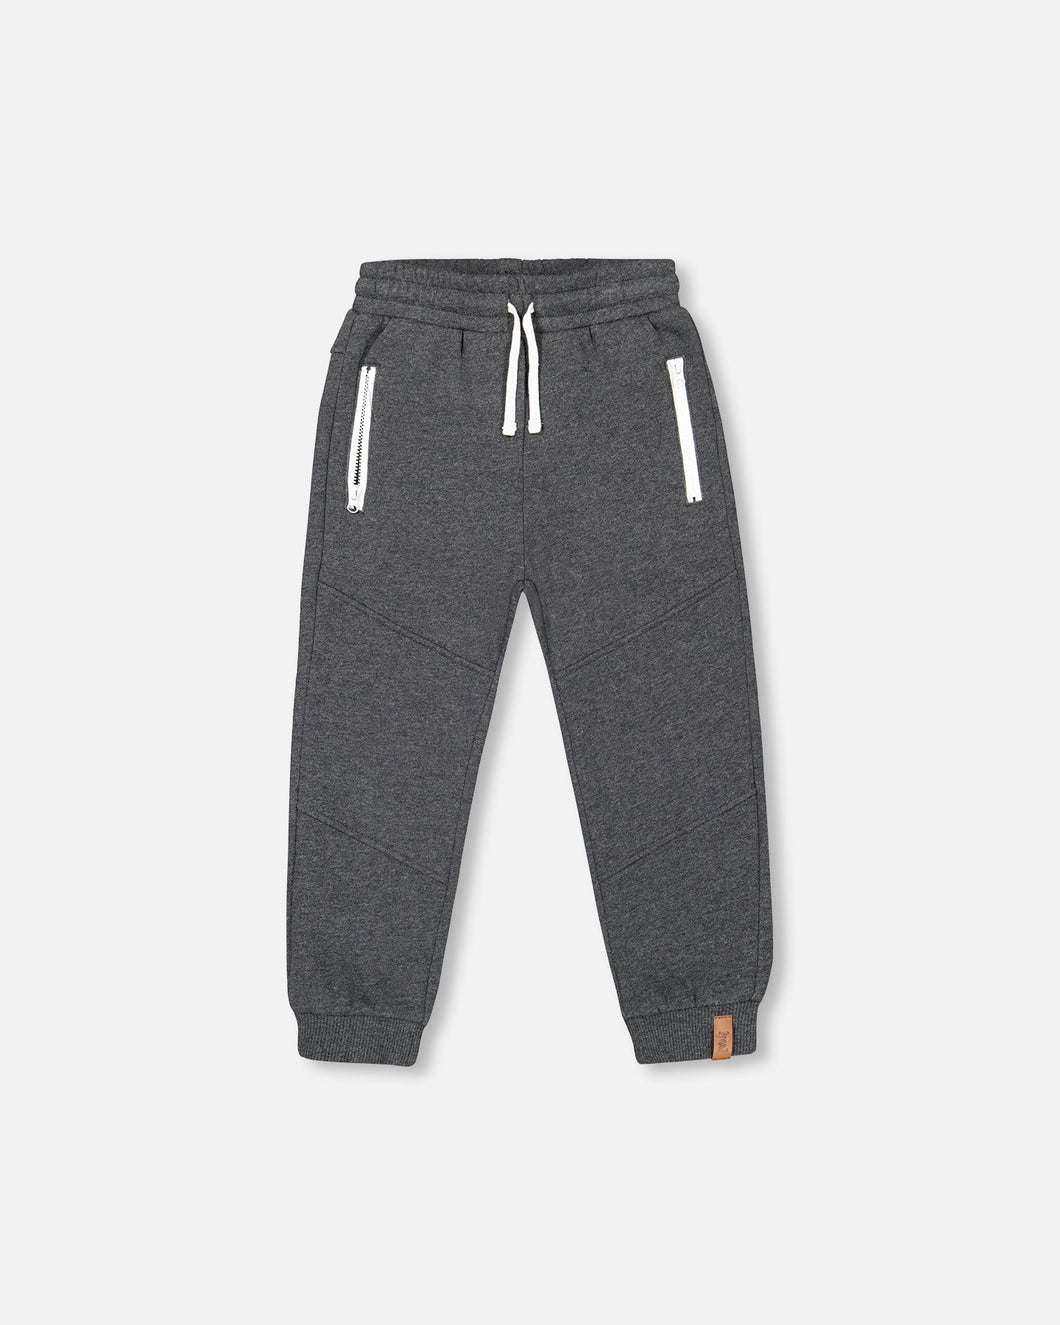 Charcoal Fleece Sweatpants With Zipper Pockets